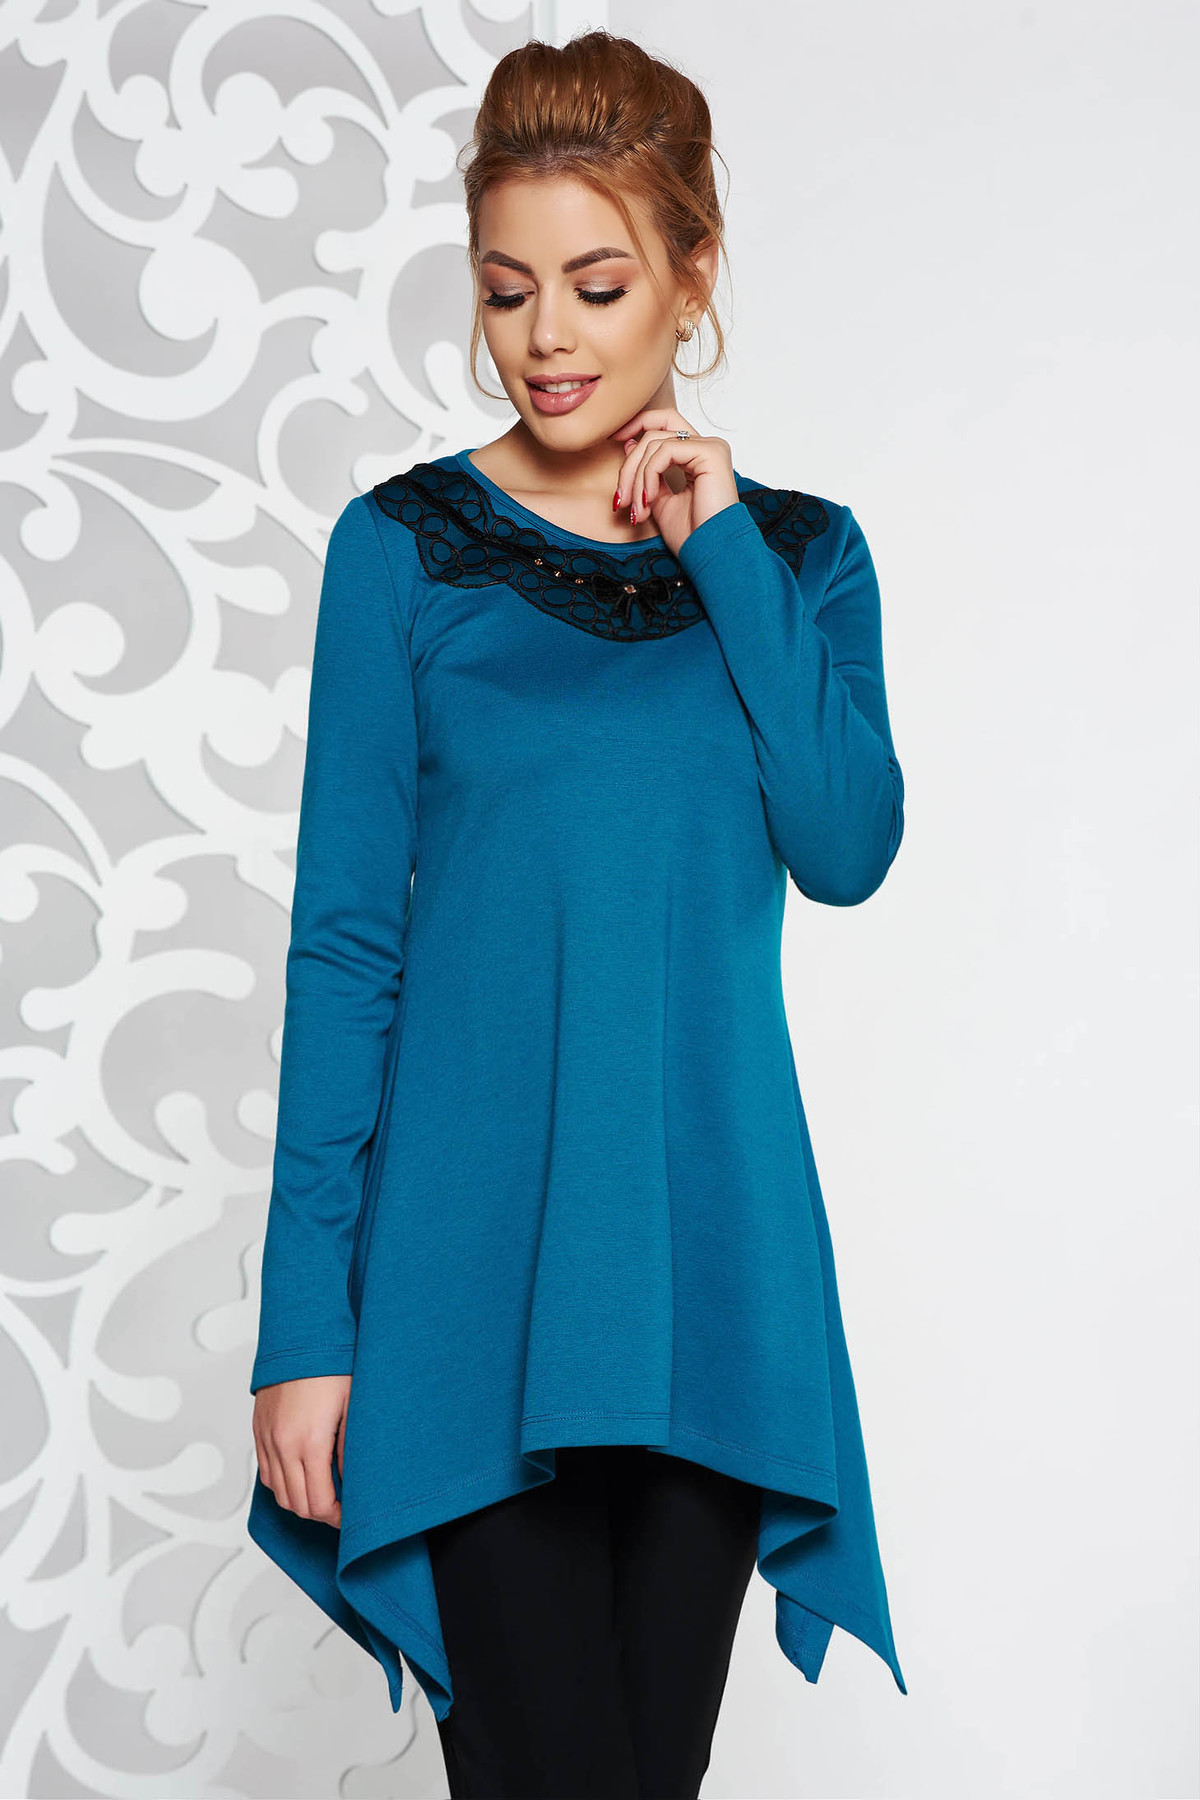 Bluza dama LaDonna turcoaz eleganta asimetrica cu croi larg din material usor elastic cu insertii de broderie